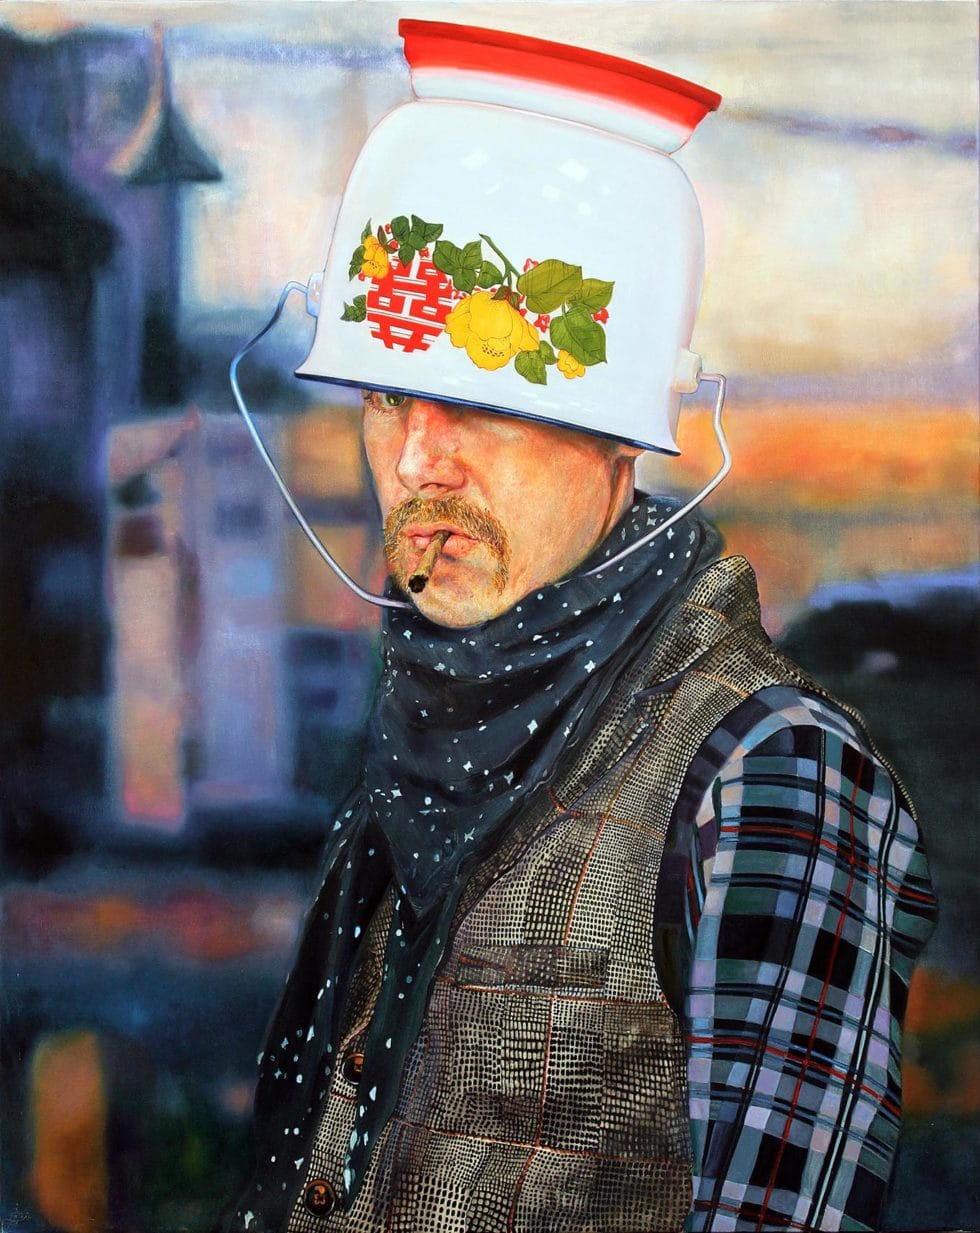 Gaël Davrinche, Cow-boy mode chinoise, huile sur toile, 200x160 cm, 2013